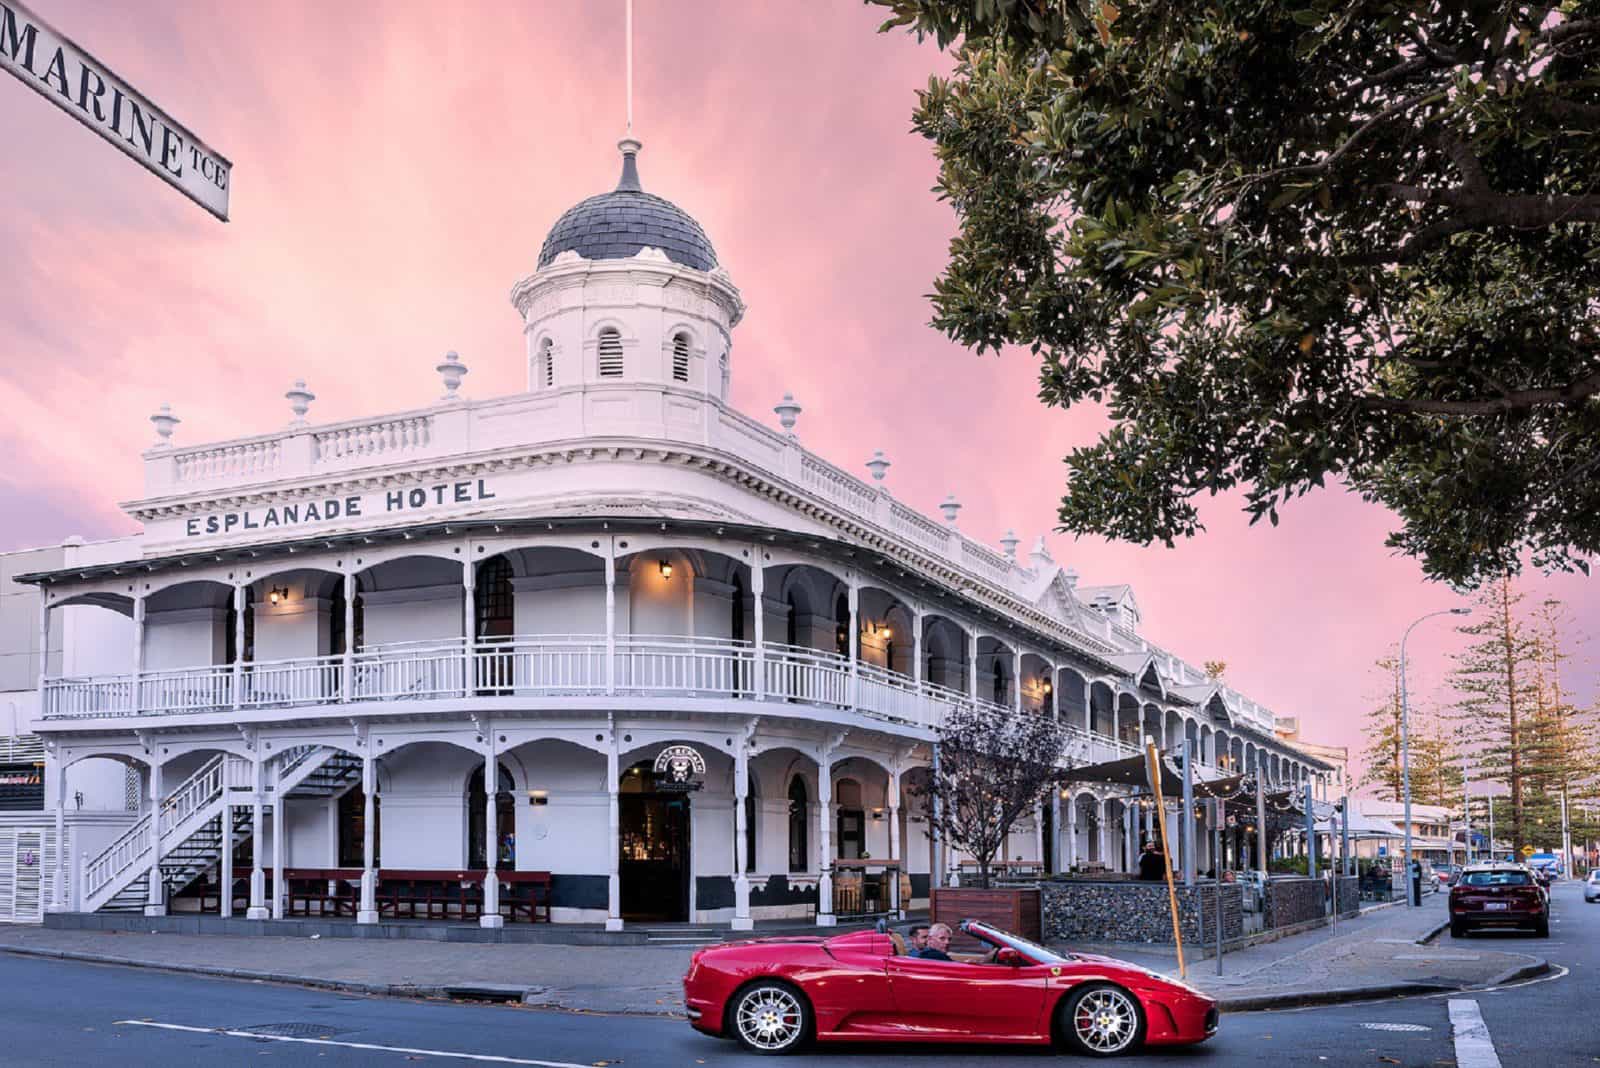 Esplanade Hotel, Fremantle, Western Australia